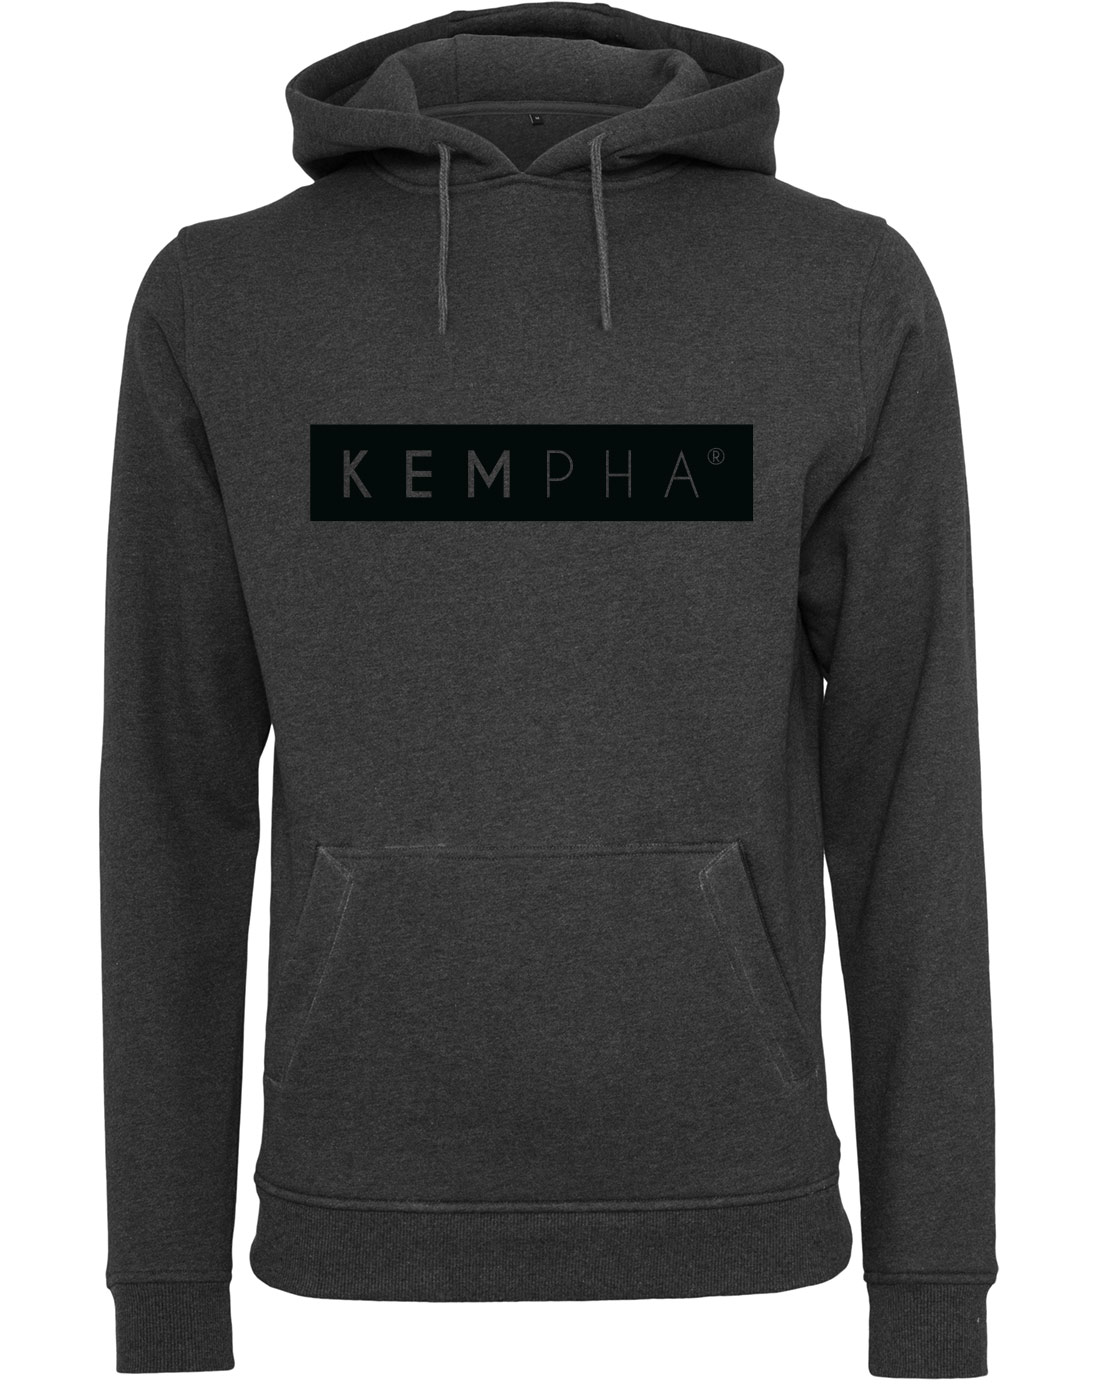 Kempha Premium Hoodie black auf charcoal